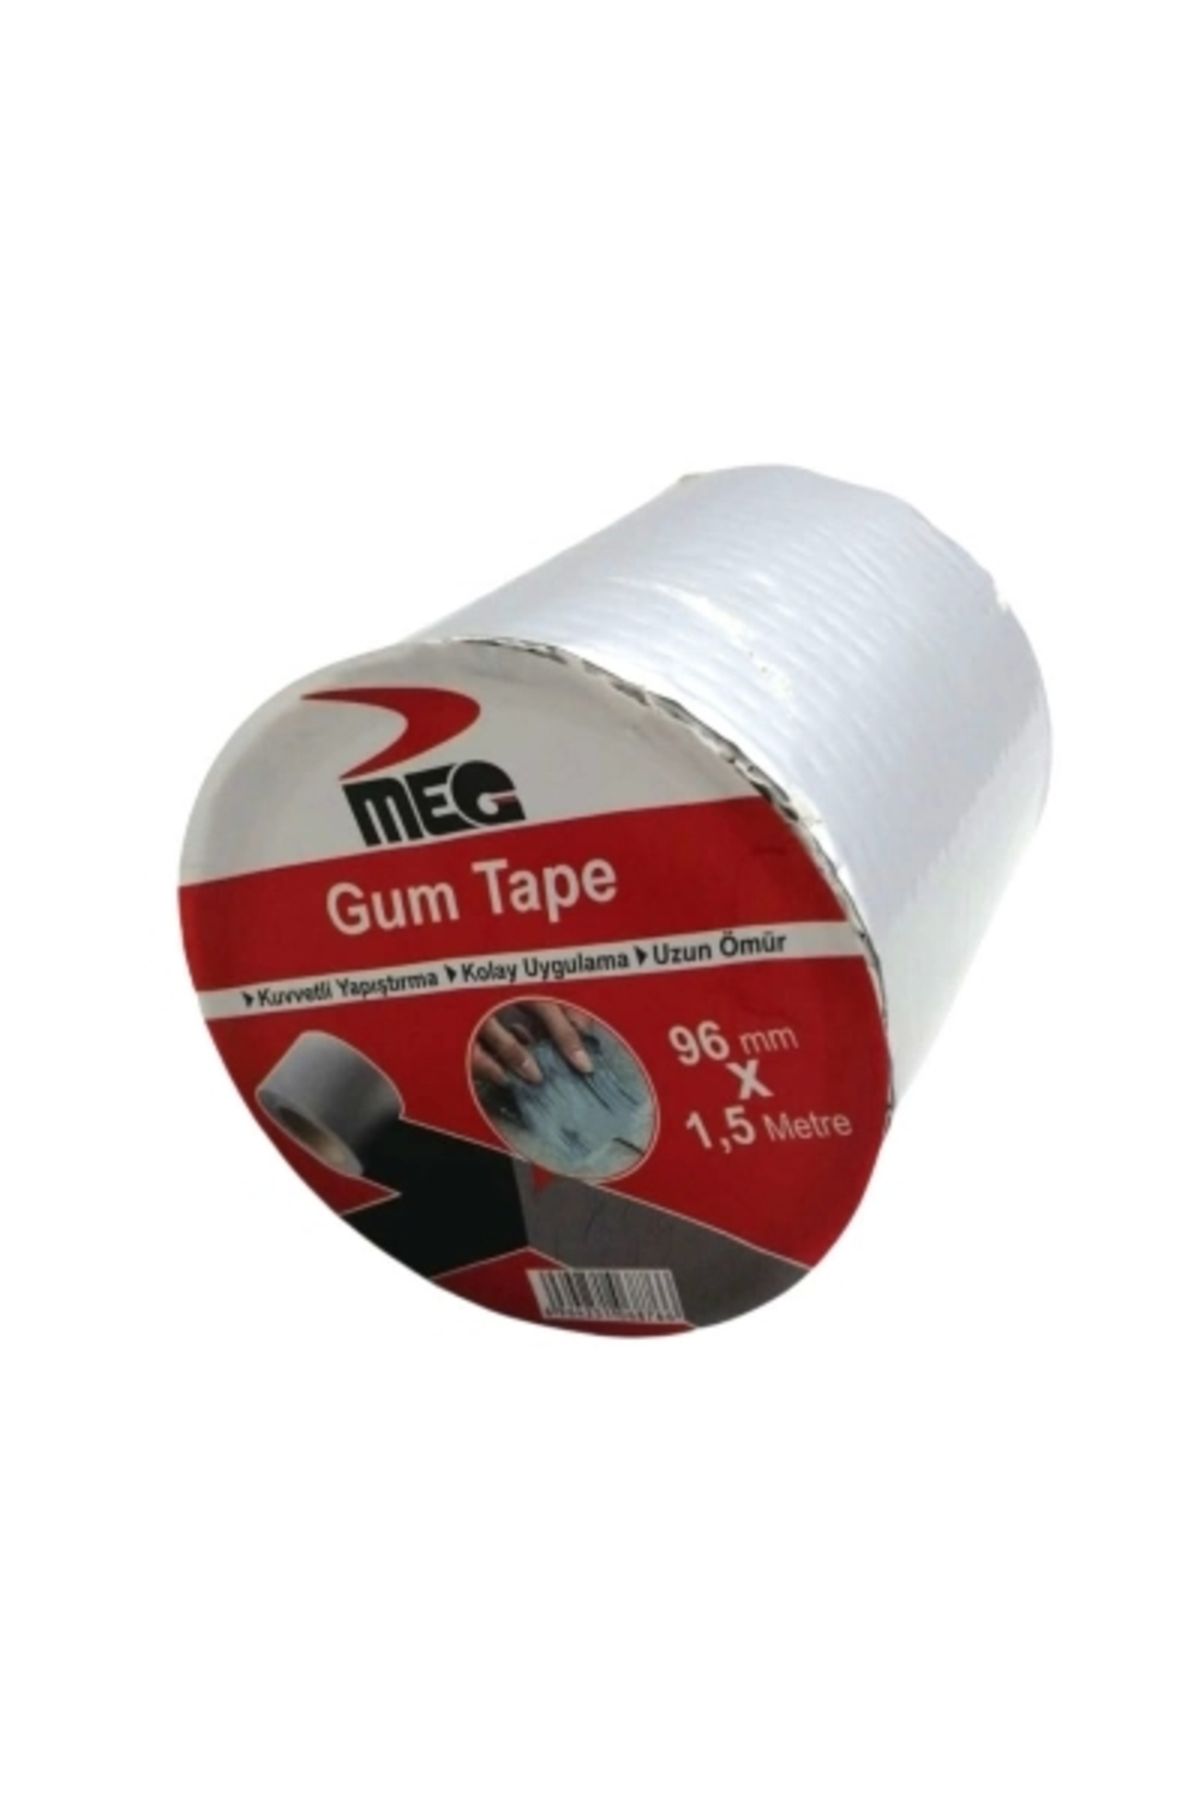 Genel Markalar Gum Tape 96mmx1.5mt Su Sızdırmaz Sakız Tamir Bantı (1243)